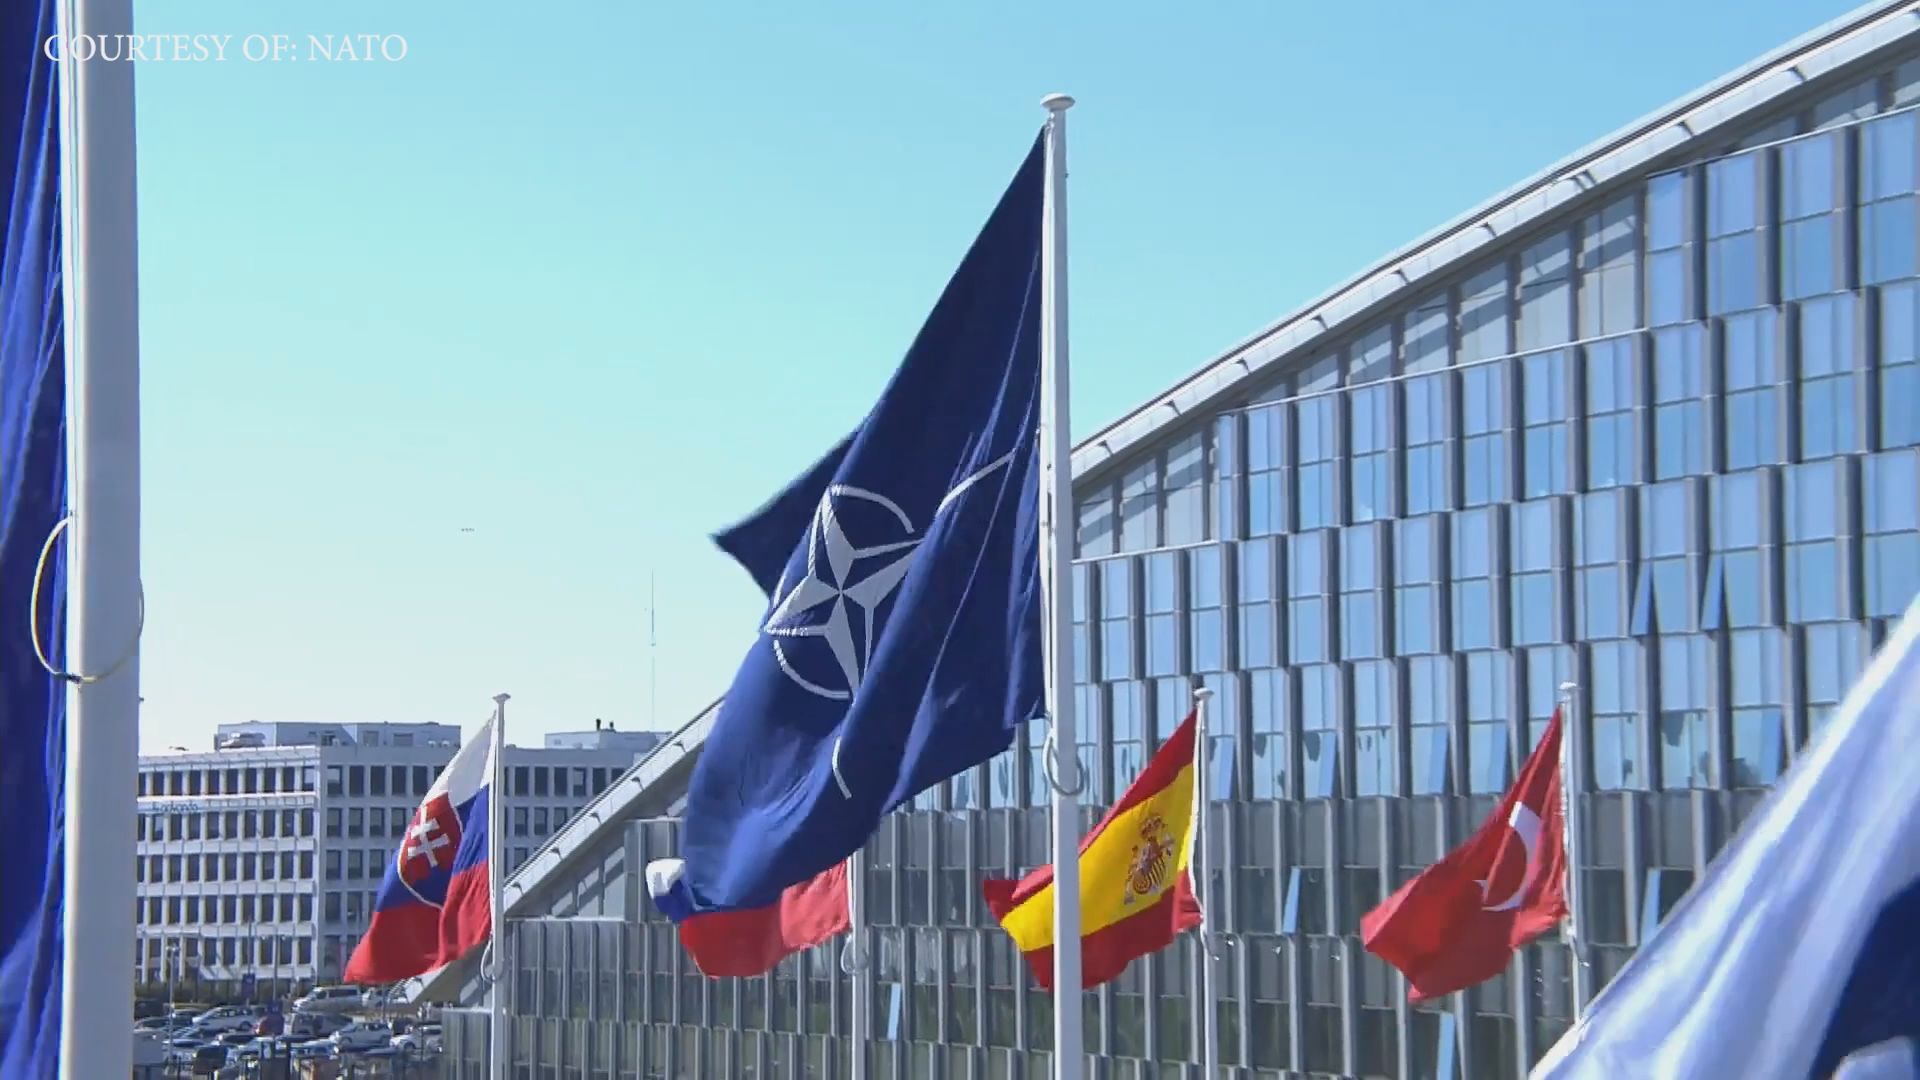 Washington Hosts 75th NATO Summit, World Watches Biden Following Debate Performance